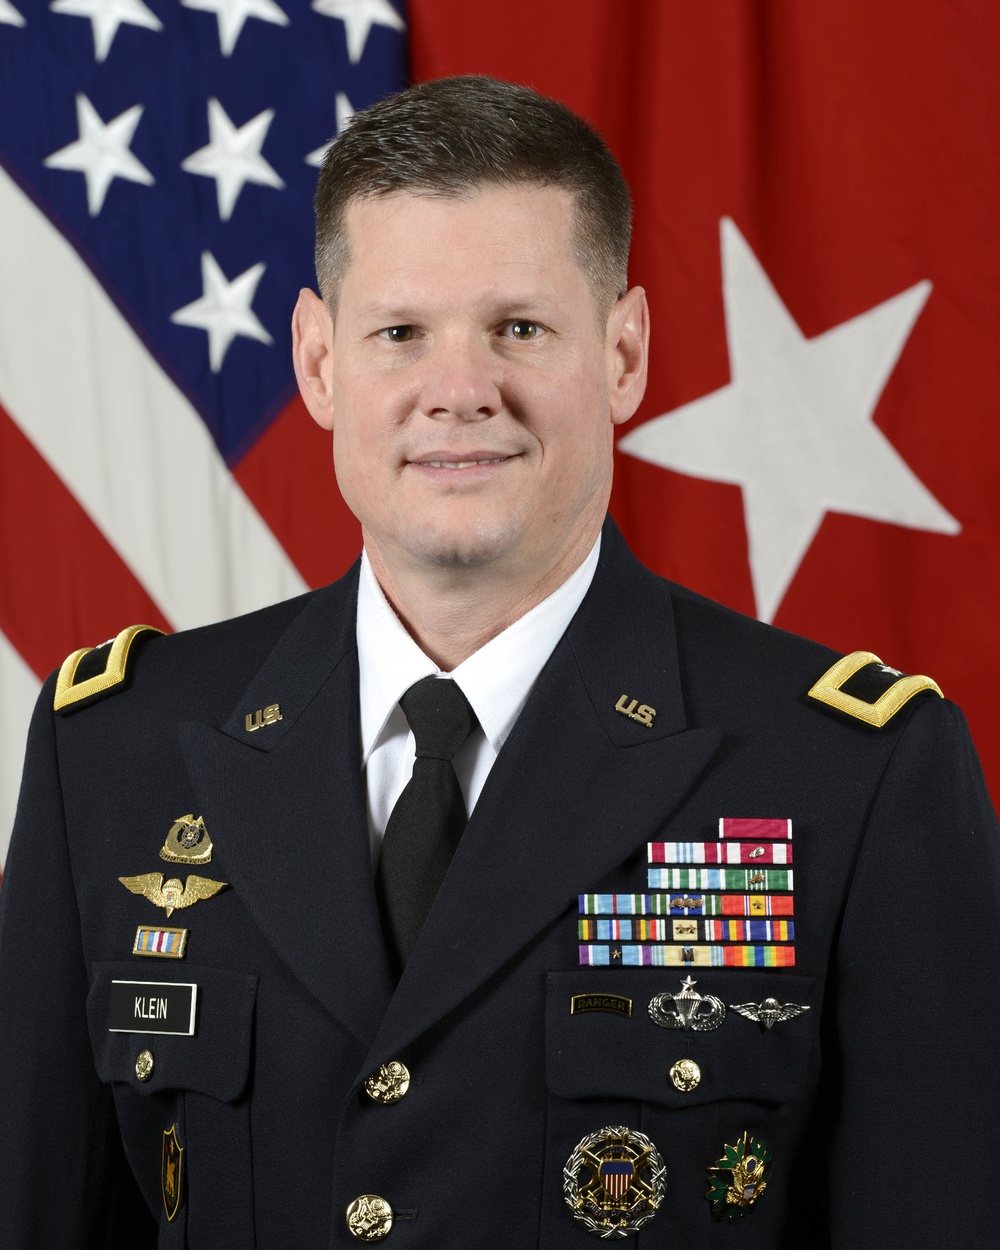 U.S. Army Brig. Gen. Martin F. Klein